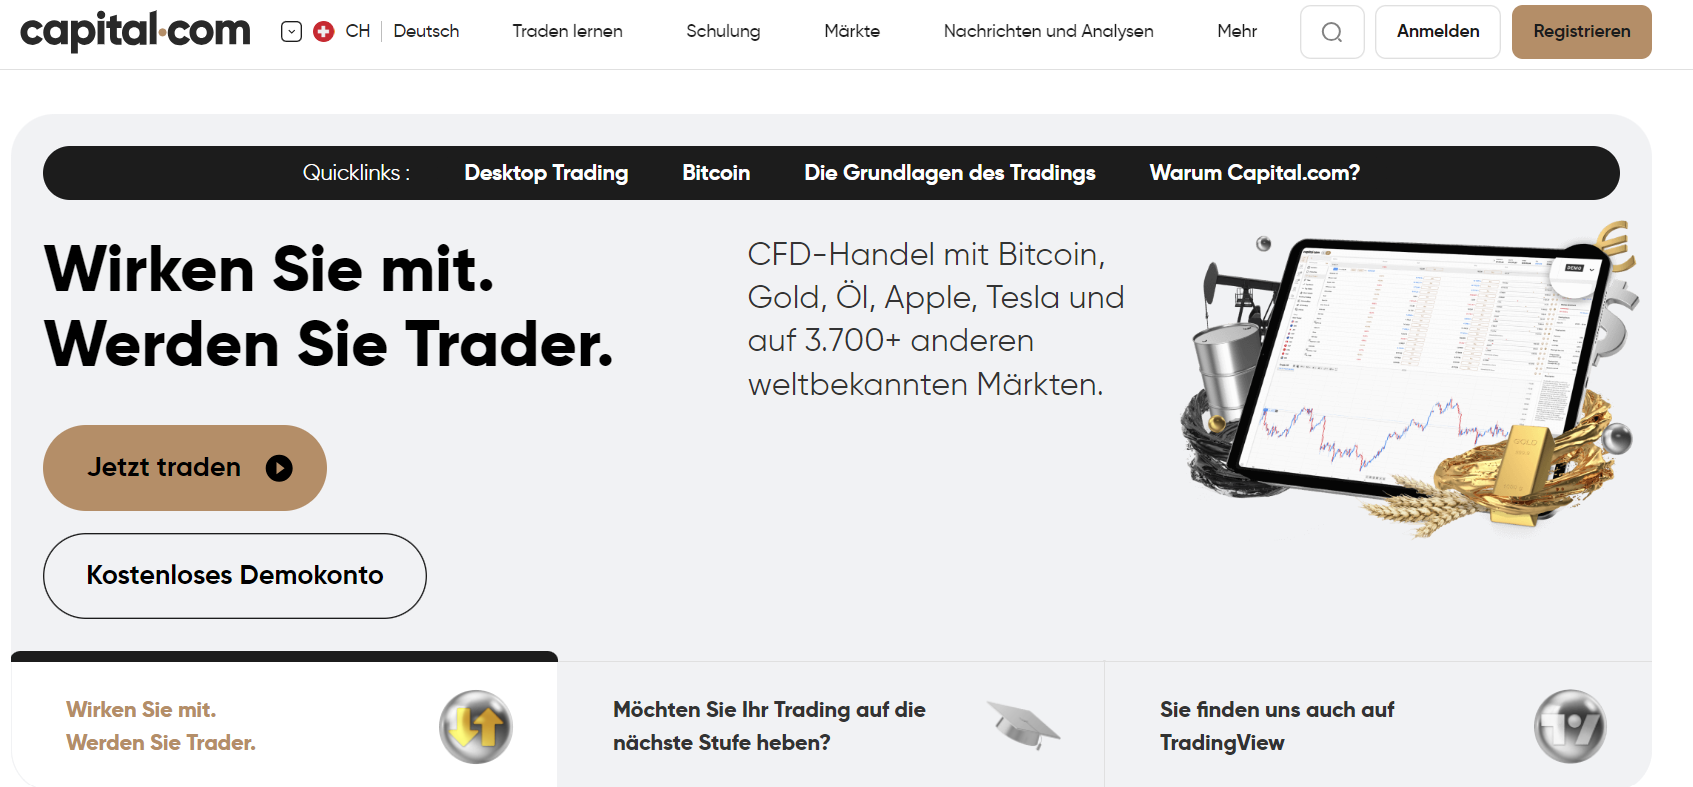 Capital.com Webseite deutsch 